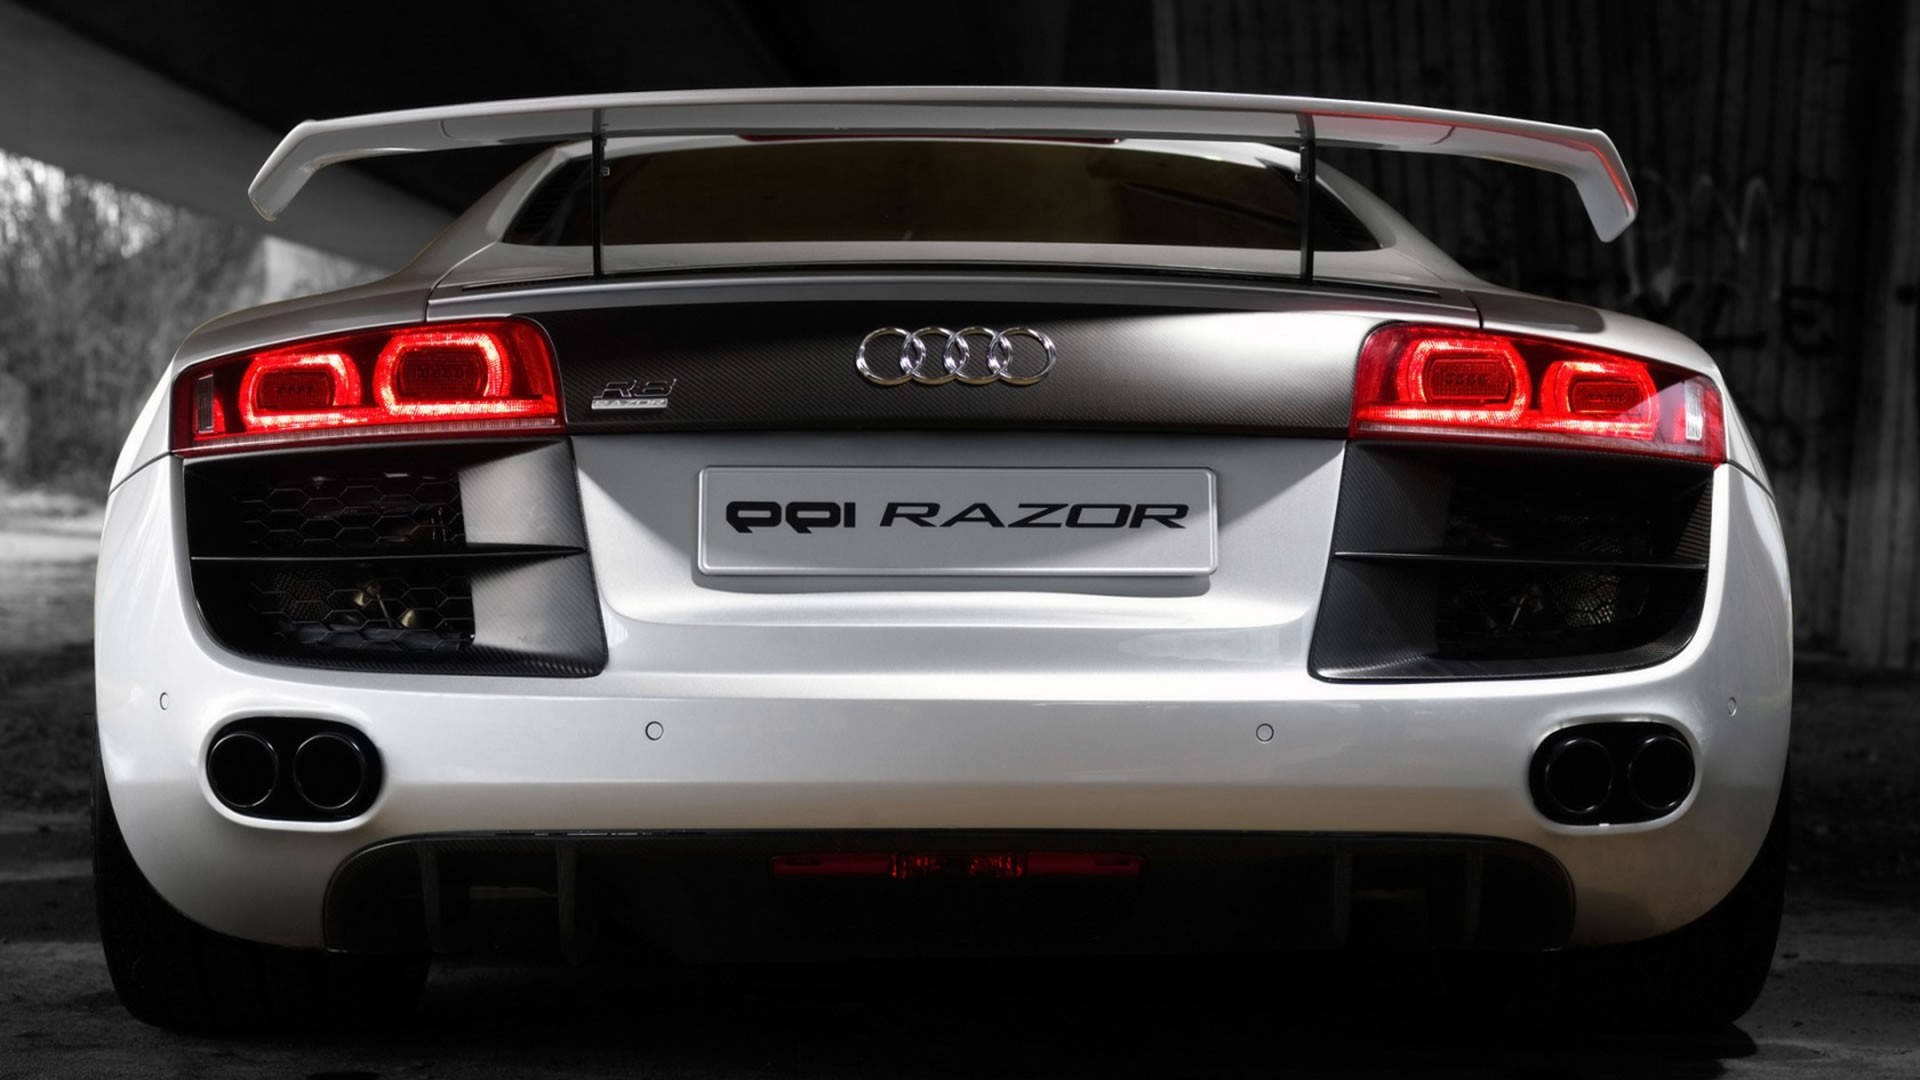 Audi R8 Ppi Razor Luxury Car Wallpaper